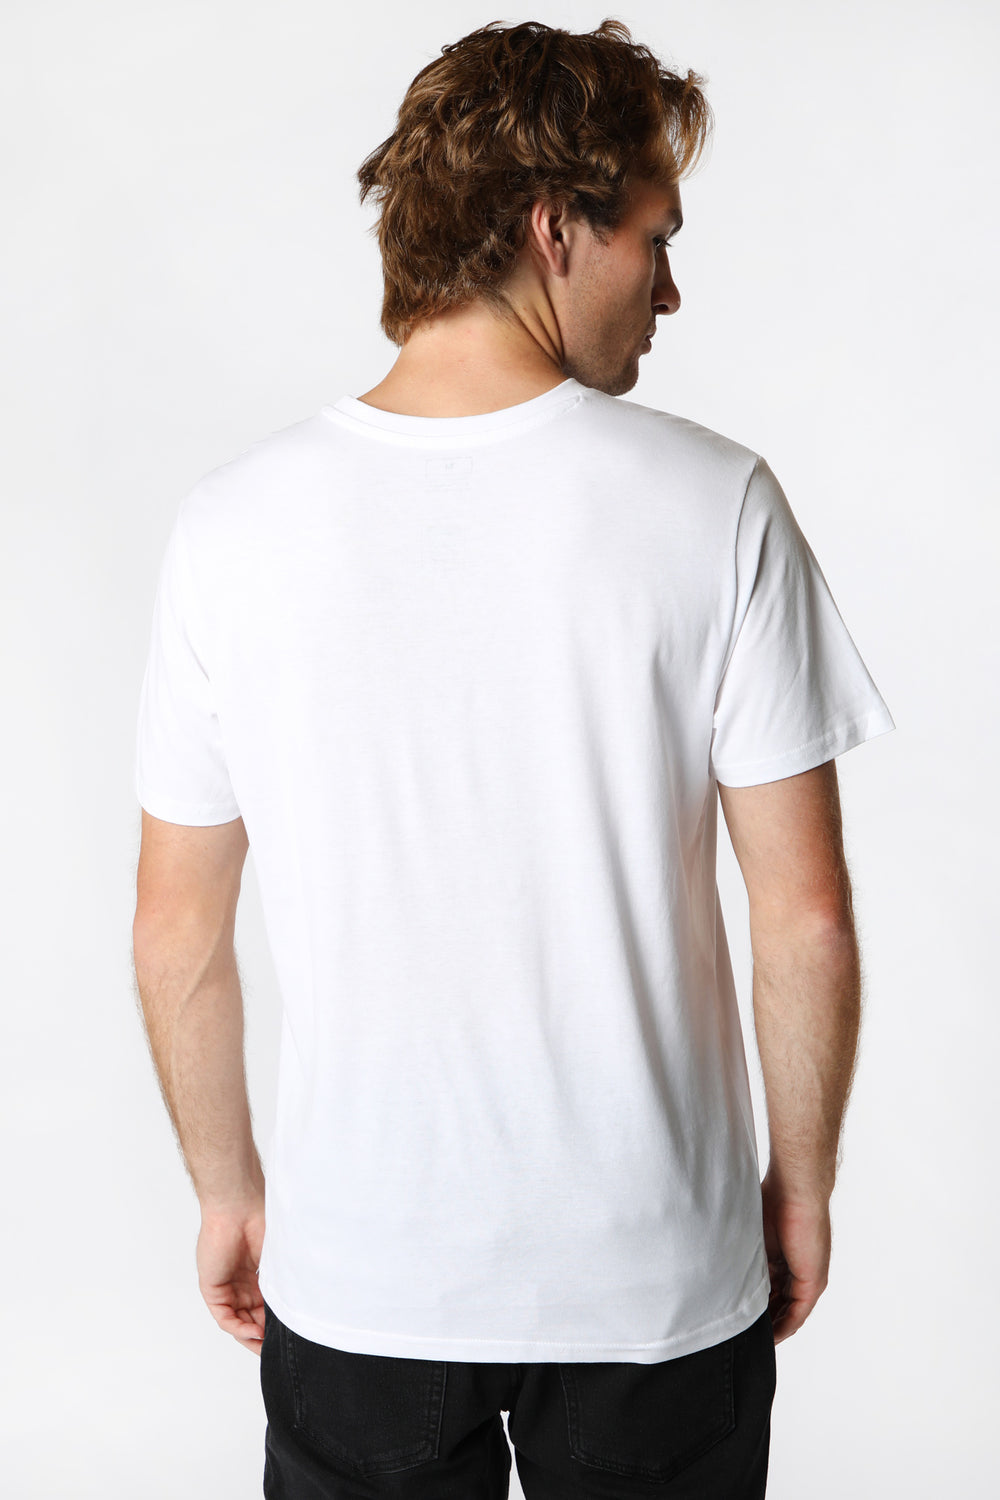 T-Shirt Imprimé Ford Mustang Homme Blanc